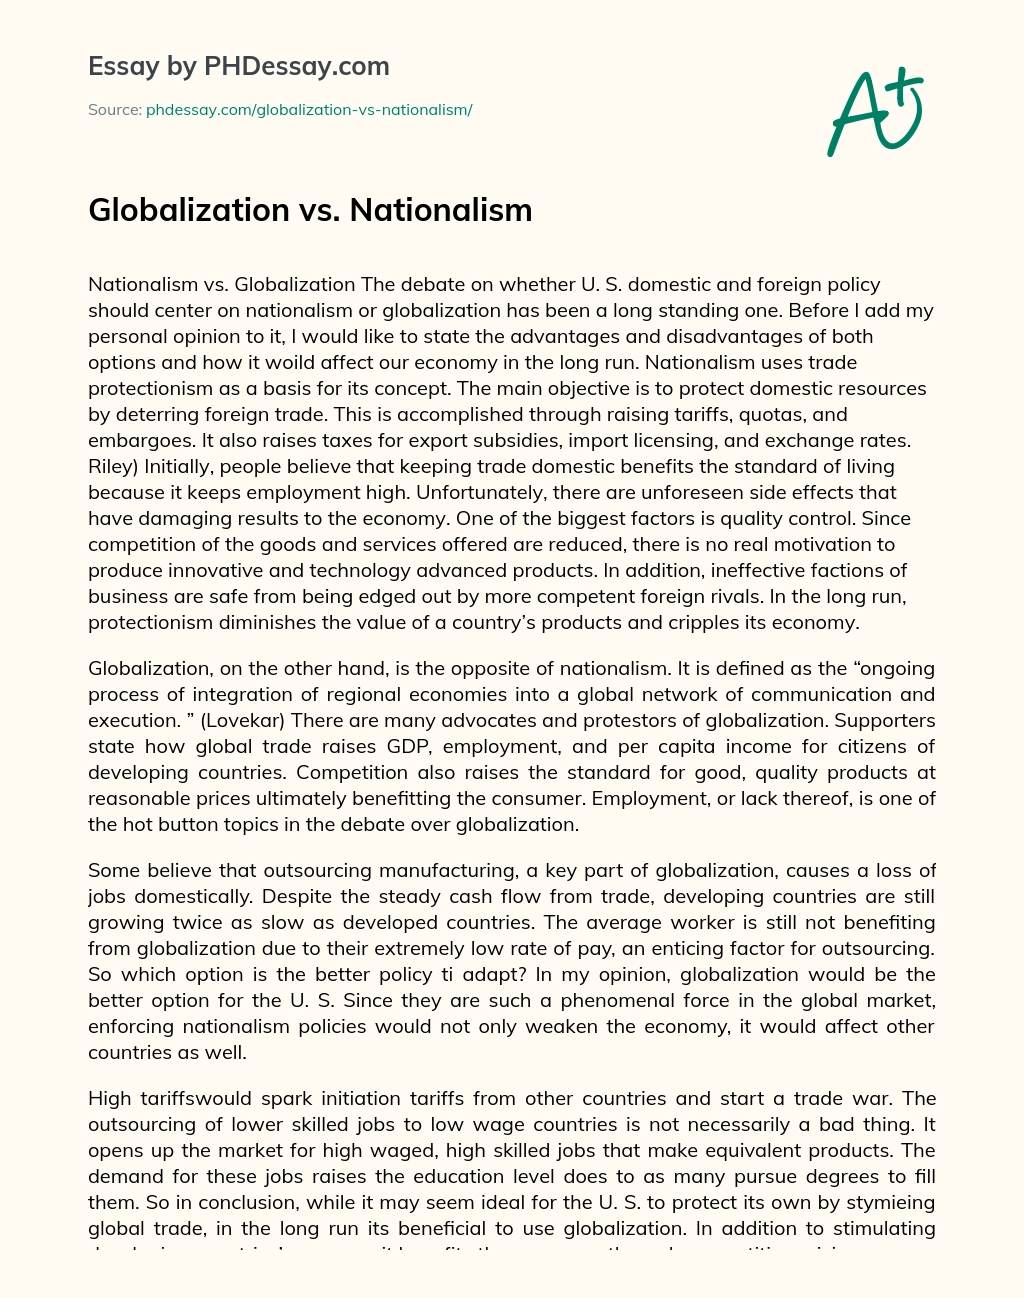 Globalization vs. Nationalism essay